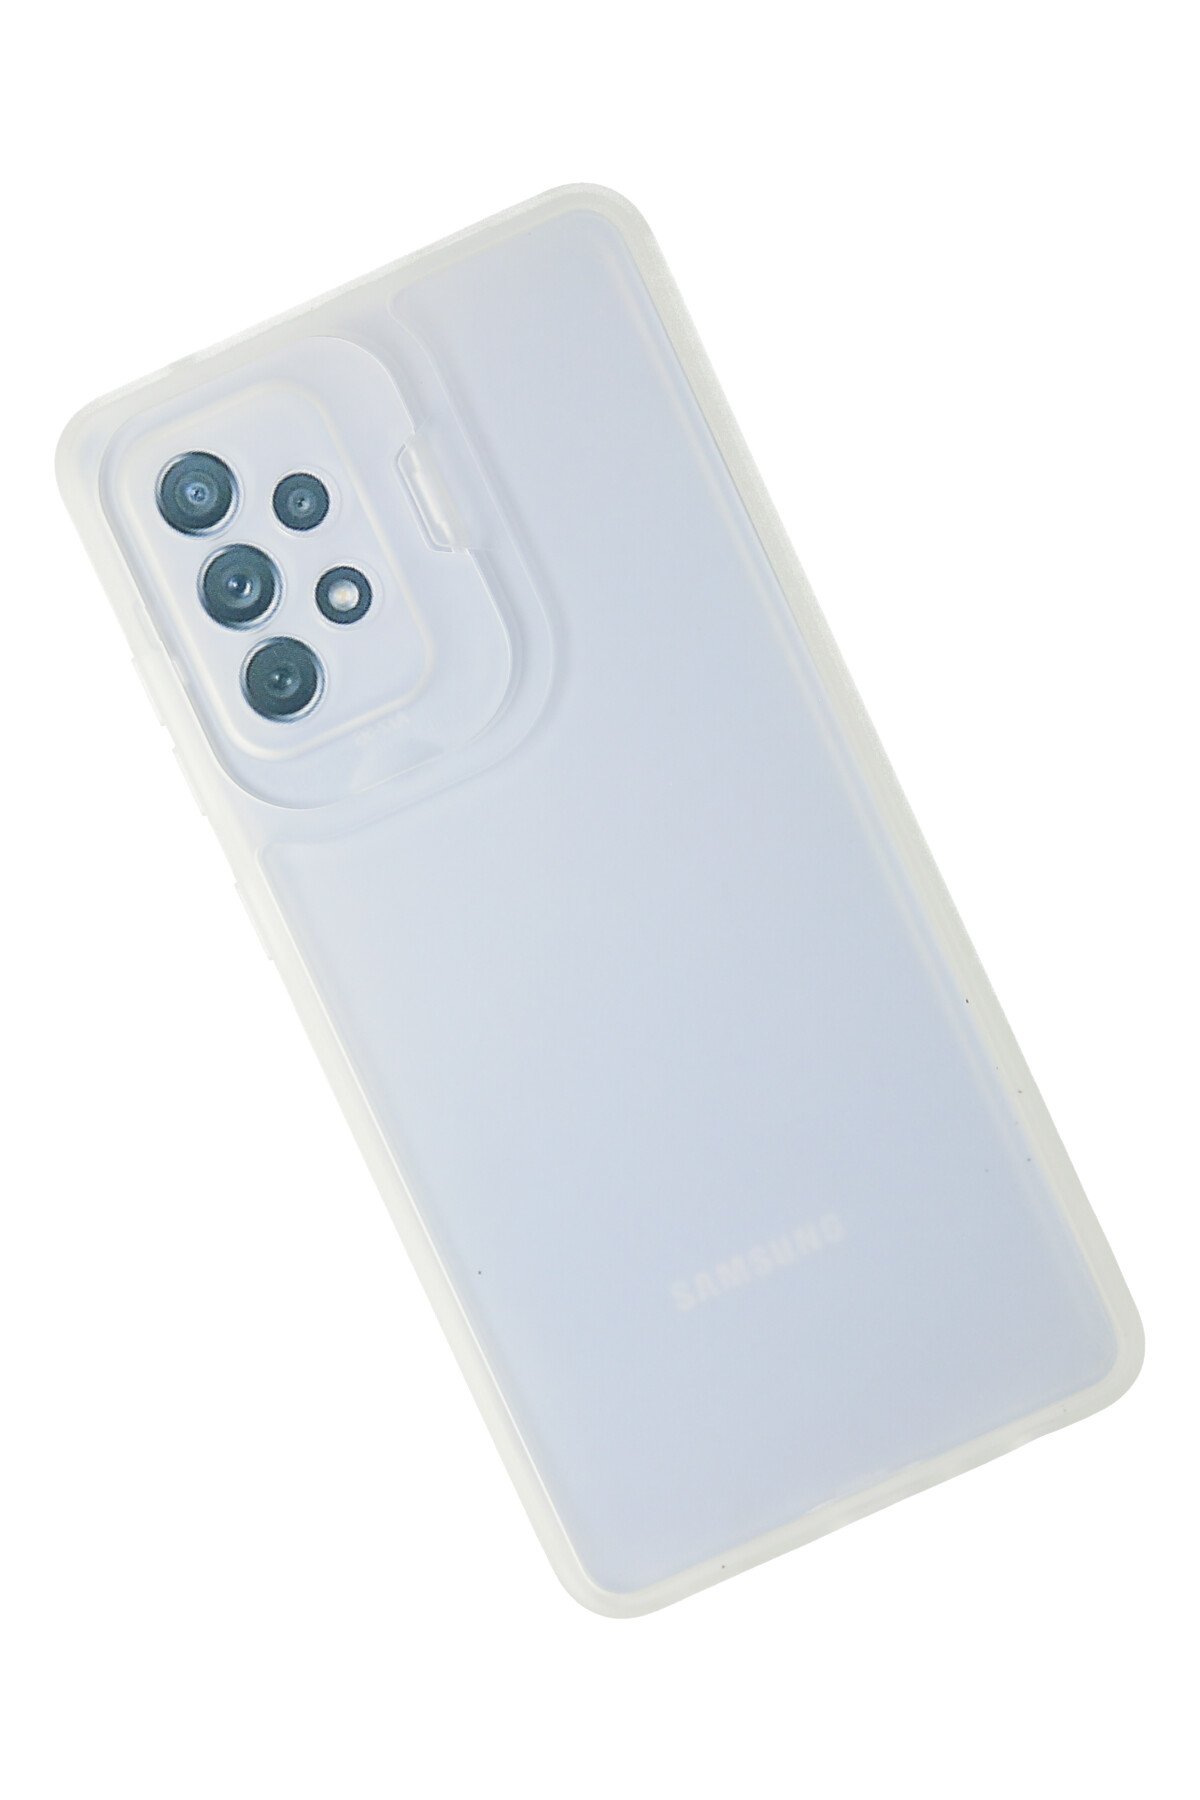 Newface Samsung Galaxy A72 Kılıf Miami Şeffaf Silikon  - Şeffaf